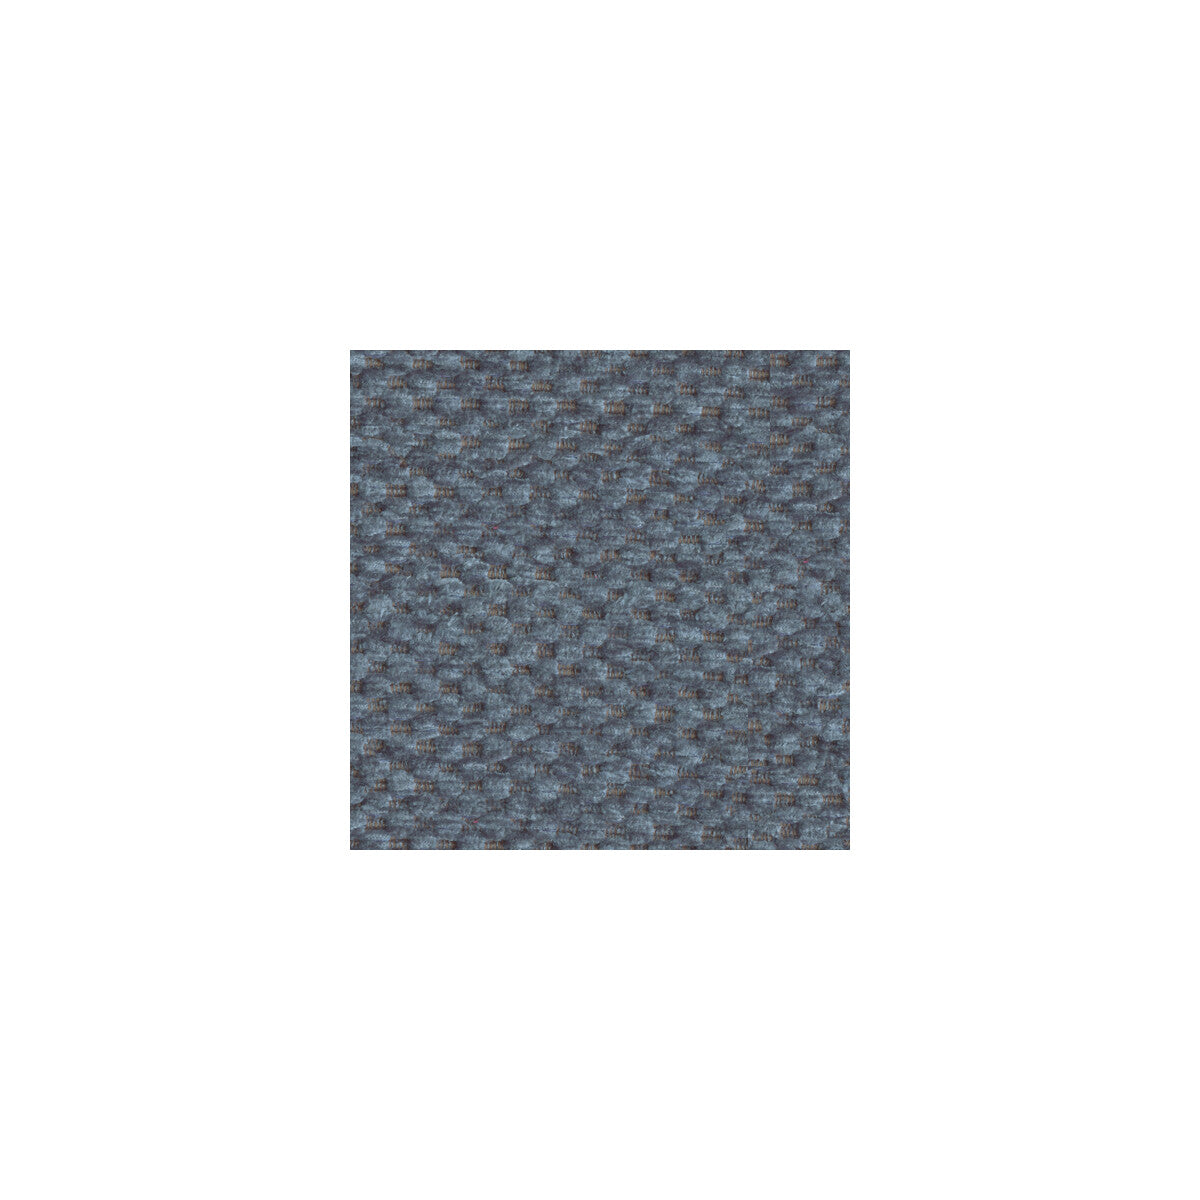 Kravet Design fabric in 31374-5 color - pattern 31374.5.0 - by Kravet Design in the Gis collection